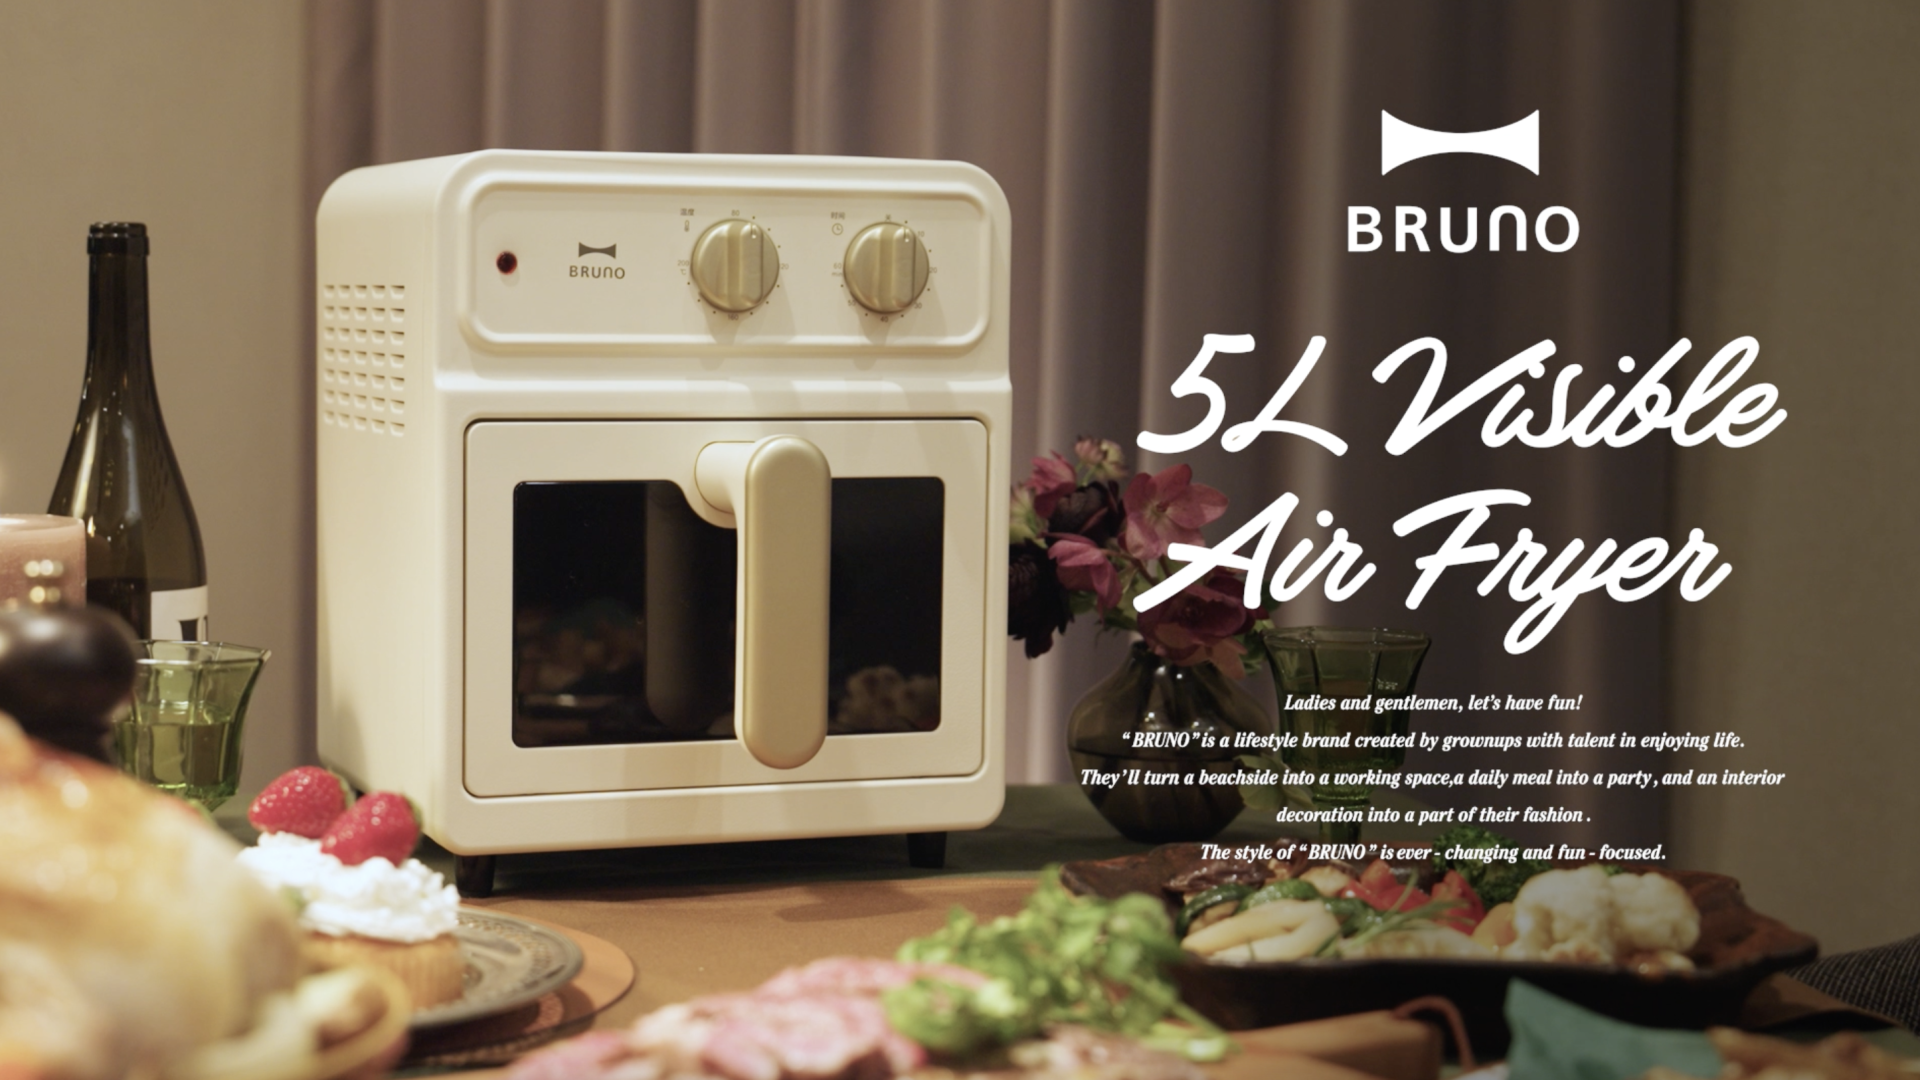 BRUNO 中国版新商品PR映像 5L Visible Air Fryer